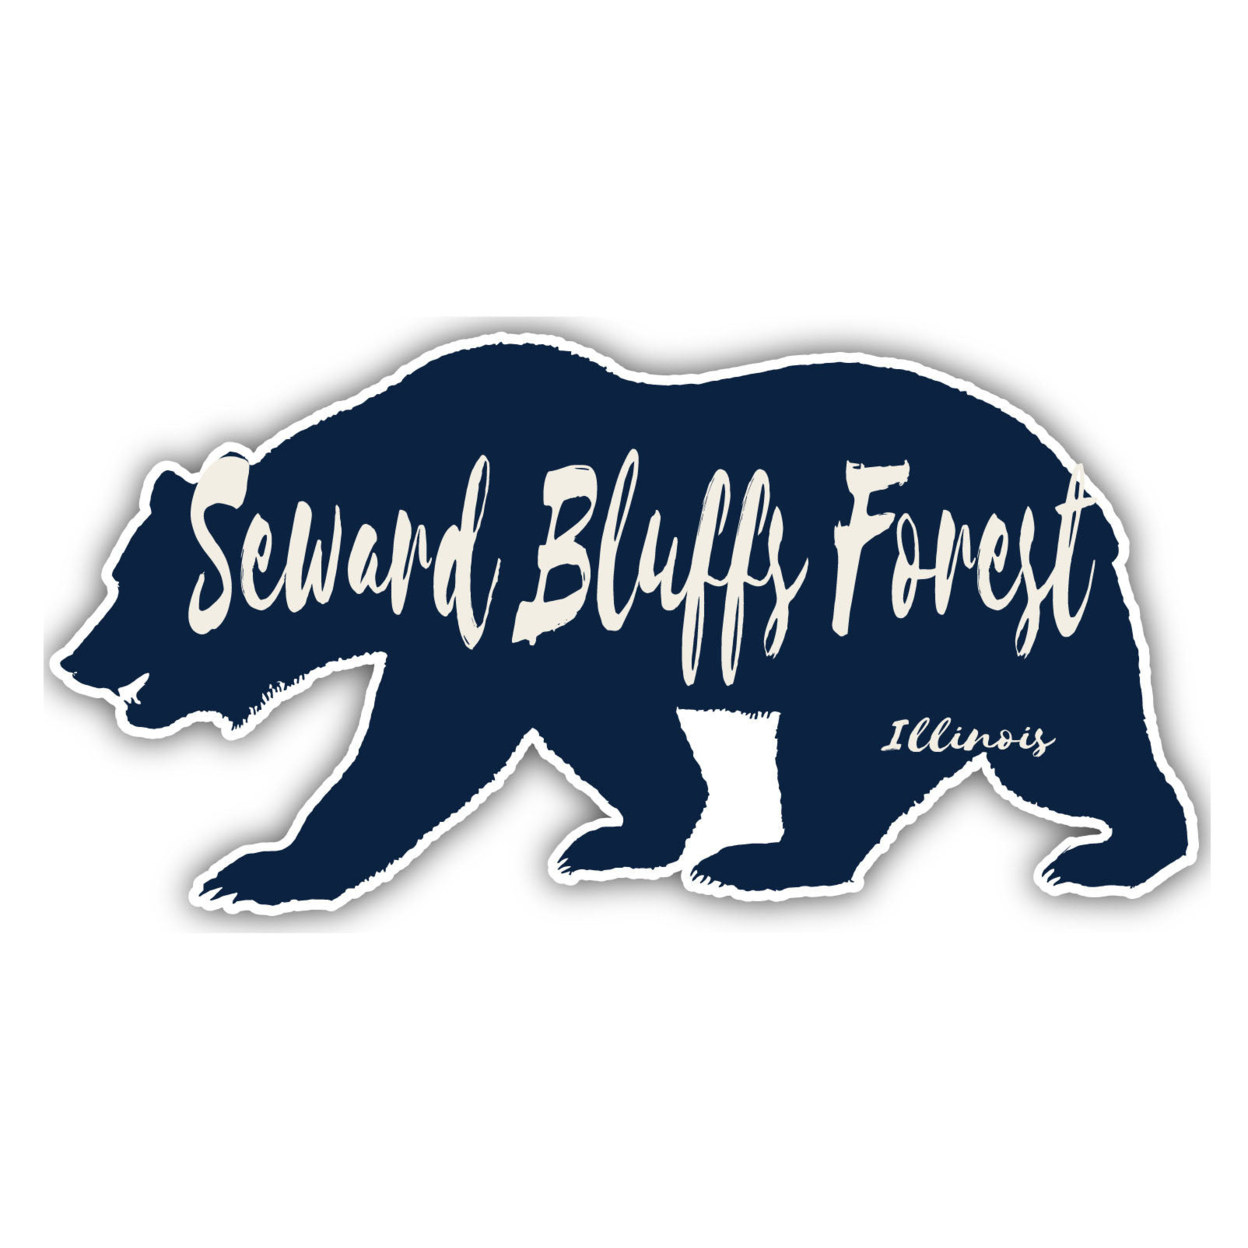 Seward Bluffs Forest Illinois Souvenir Decorative Stickers (Choose Theme And Size) - Single Unit, 2-Inch, Bear